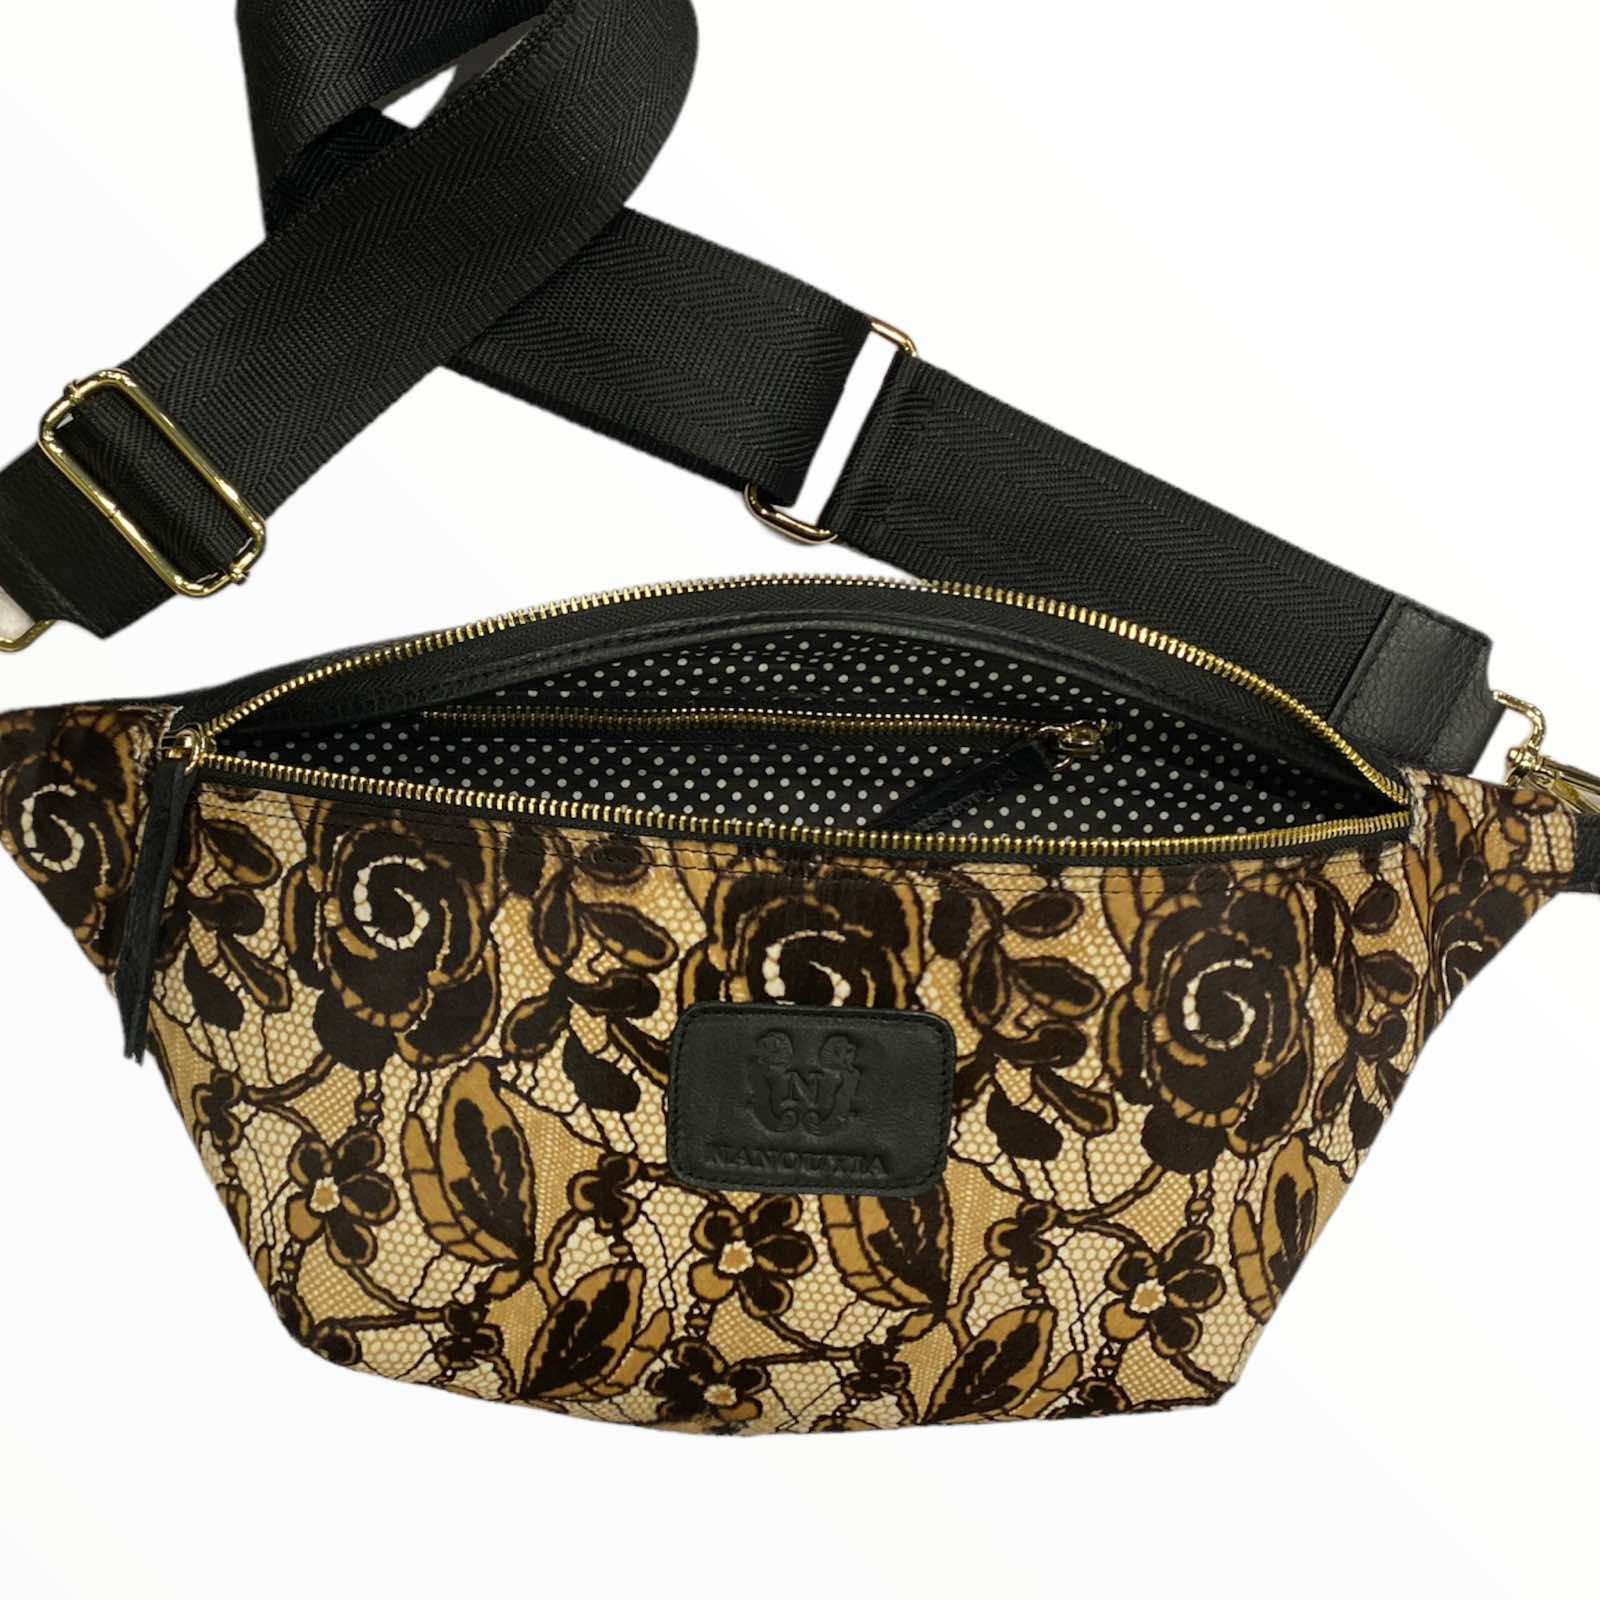 XL black and camel floral calf-hair leather belt bag